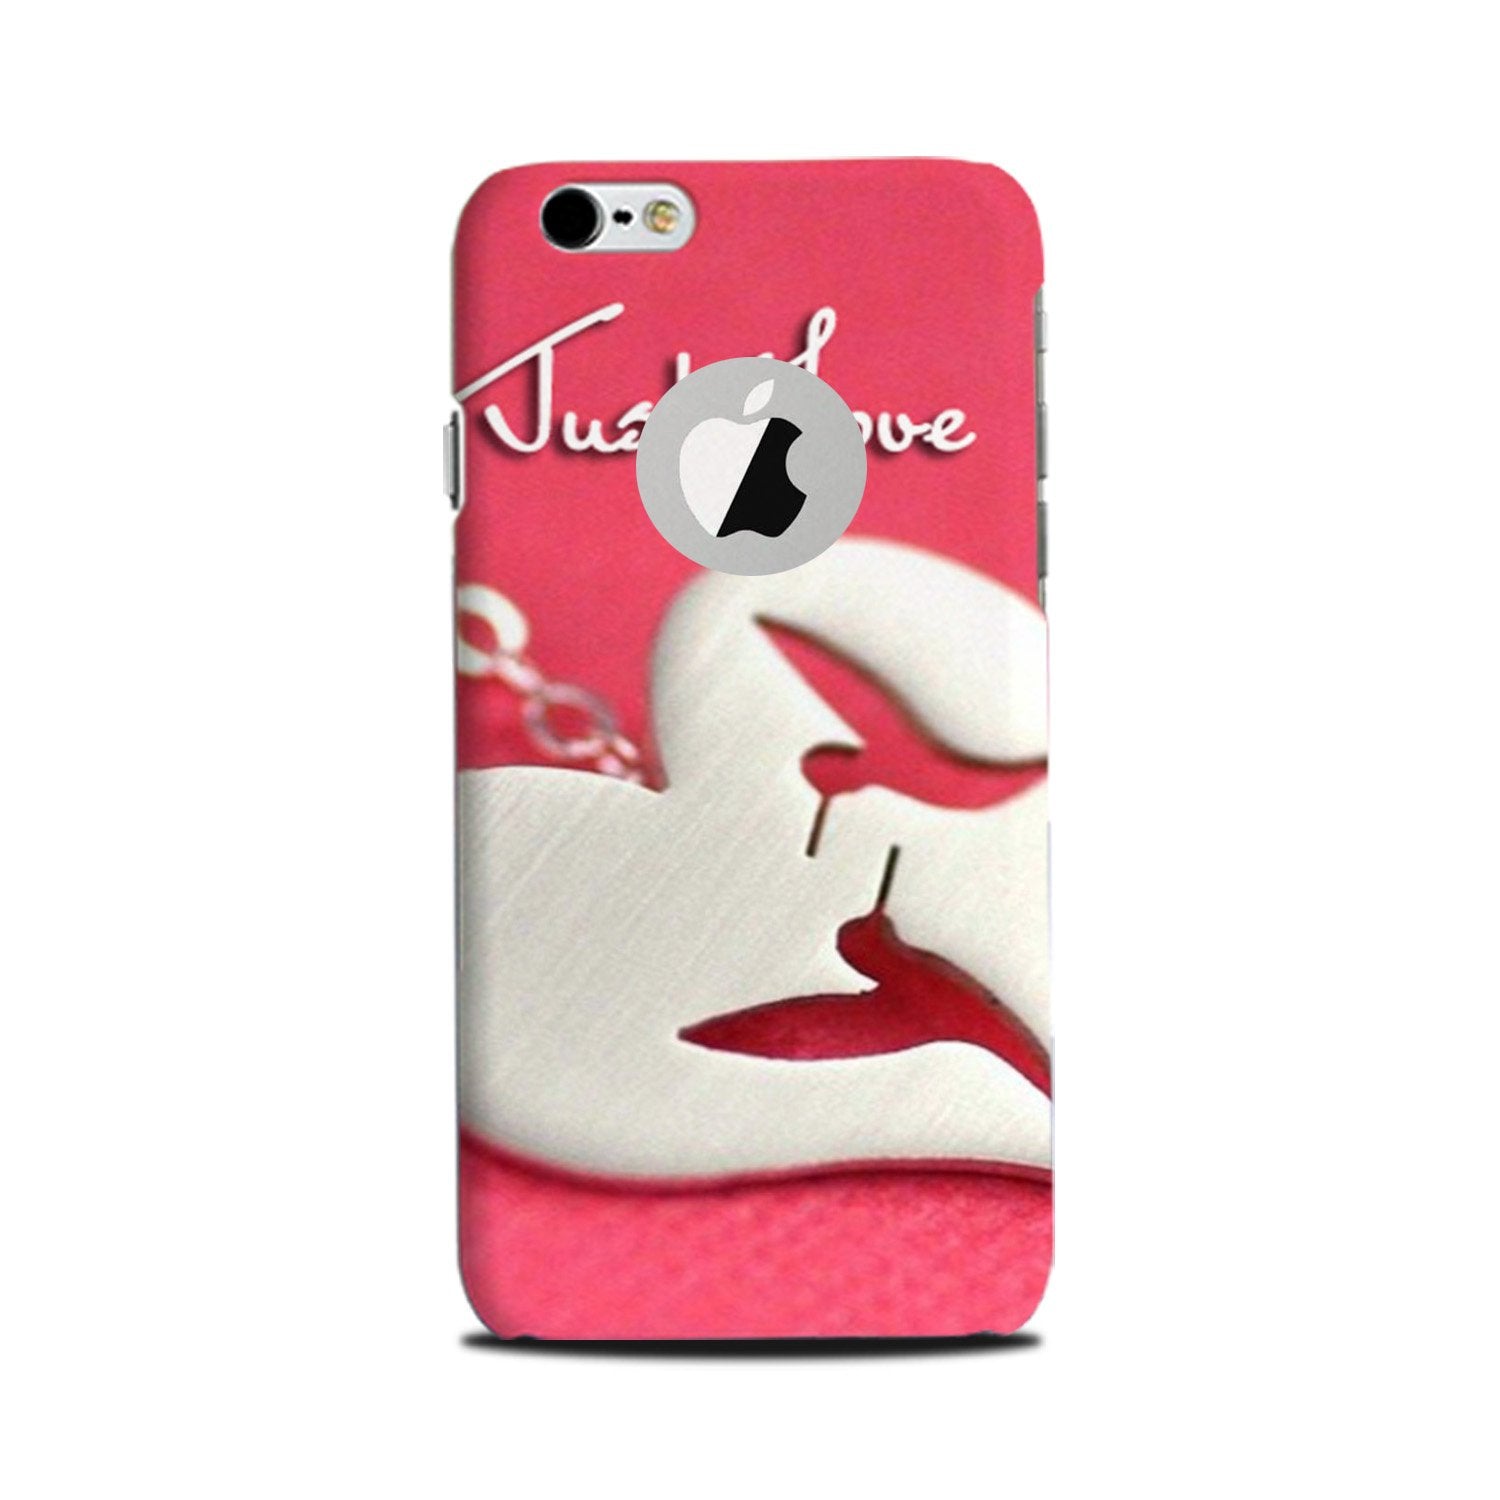 Just love Case for iPhone 6 Plus / 6s Plus logo cut 